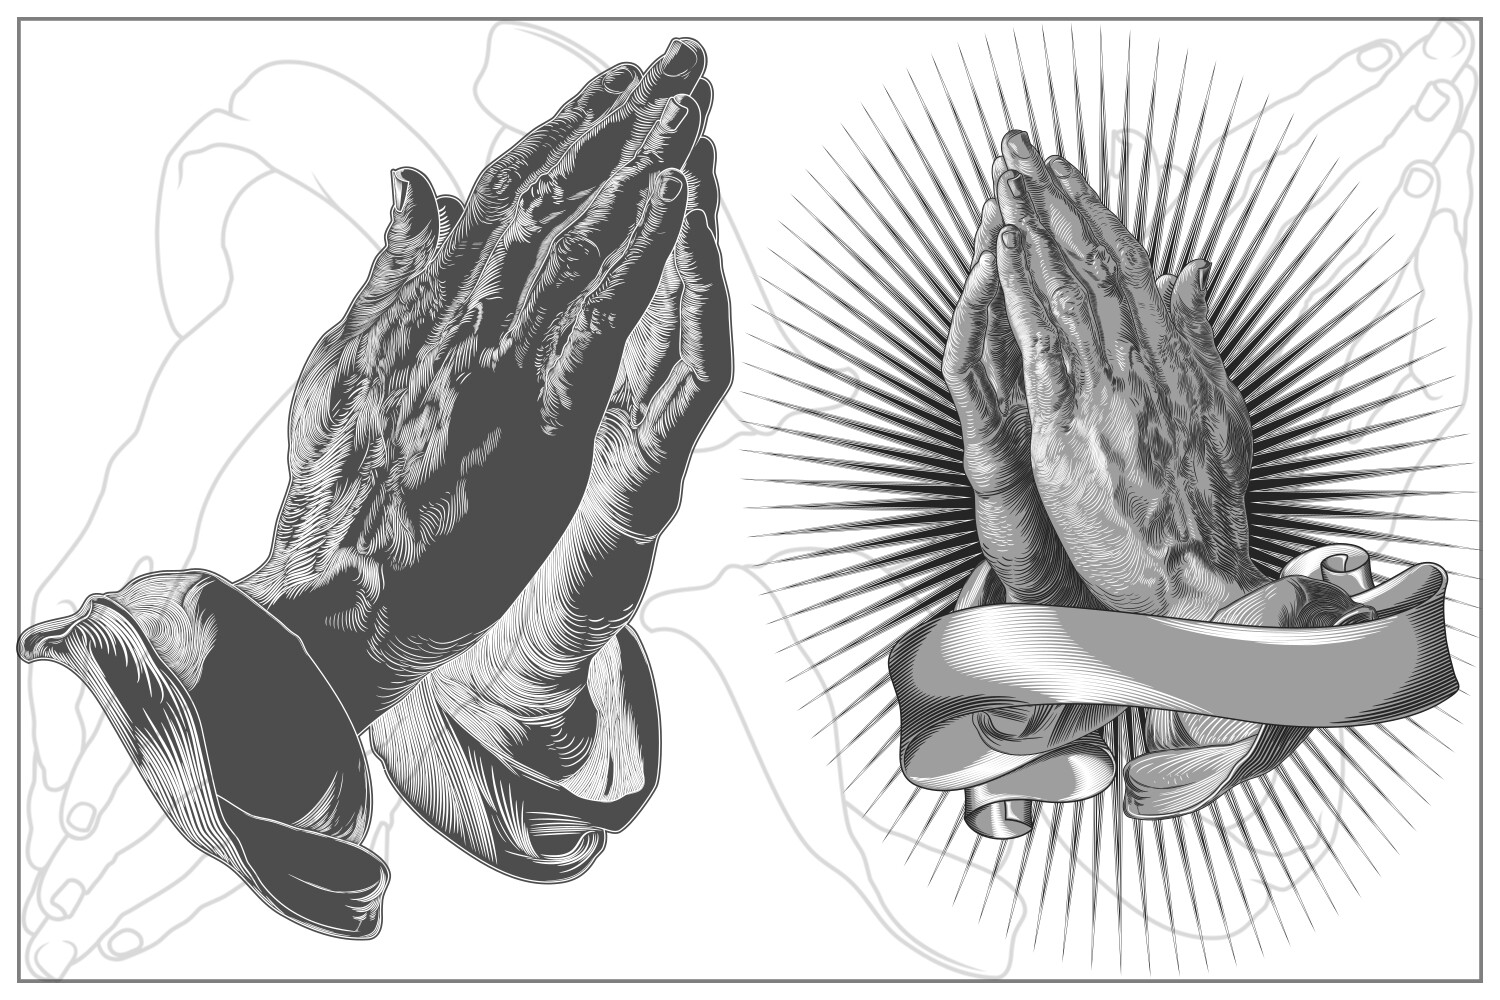 ArtStation - Vector Design Of Hands Prayer Position | Artworks